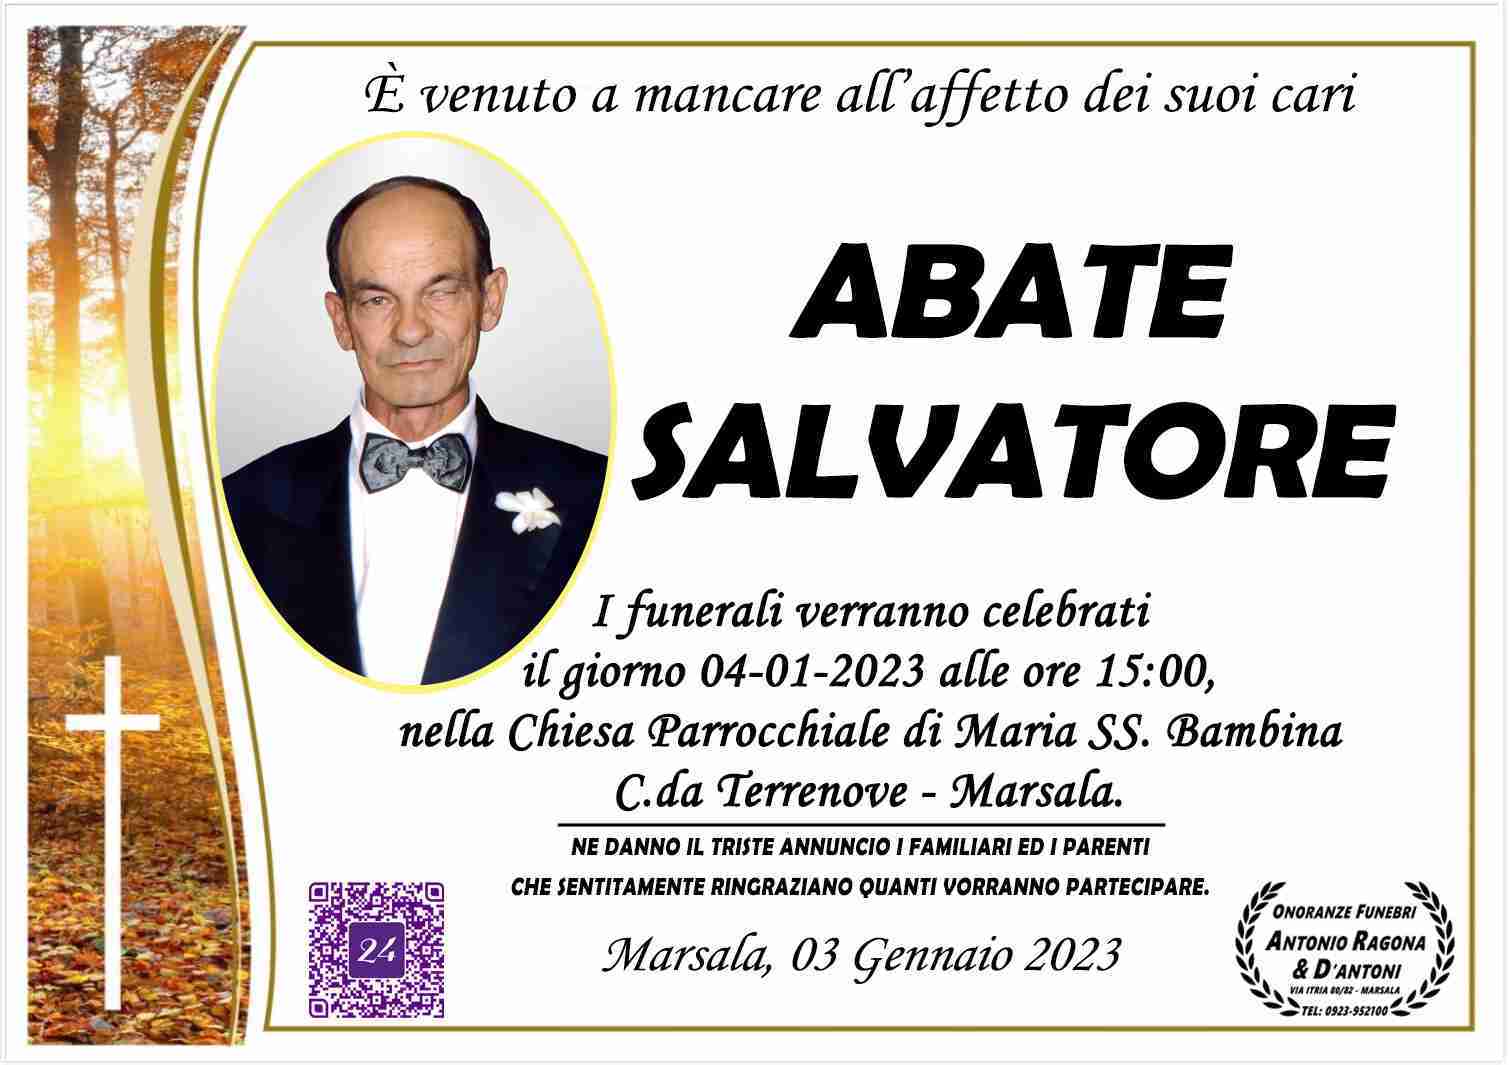 Salvatore Abate